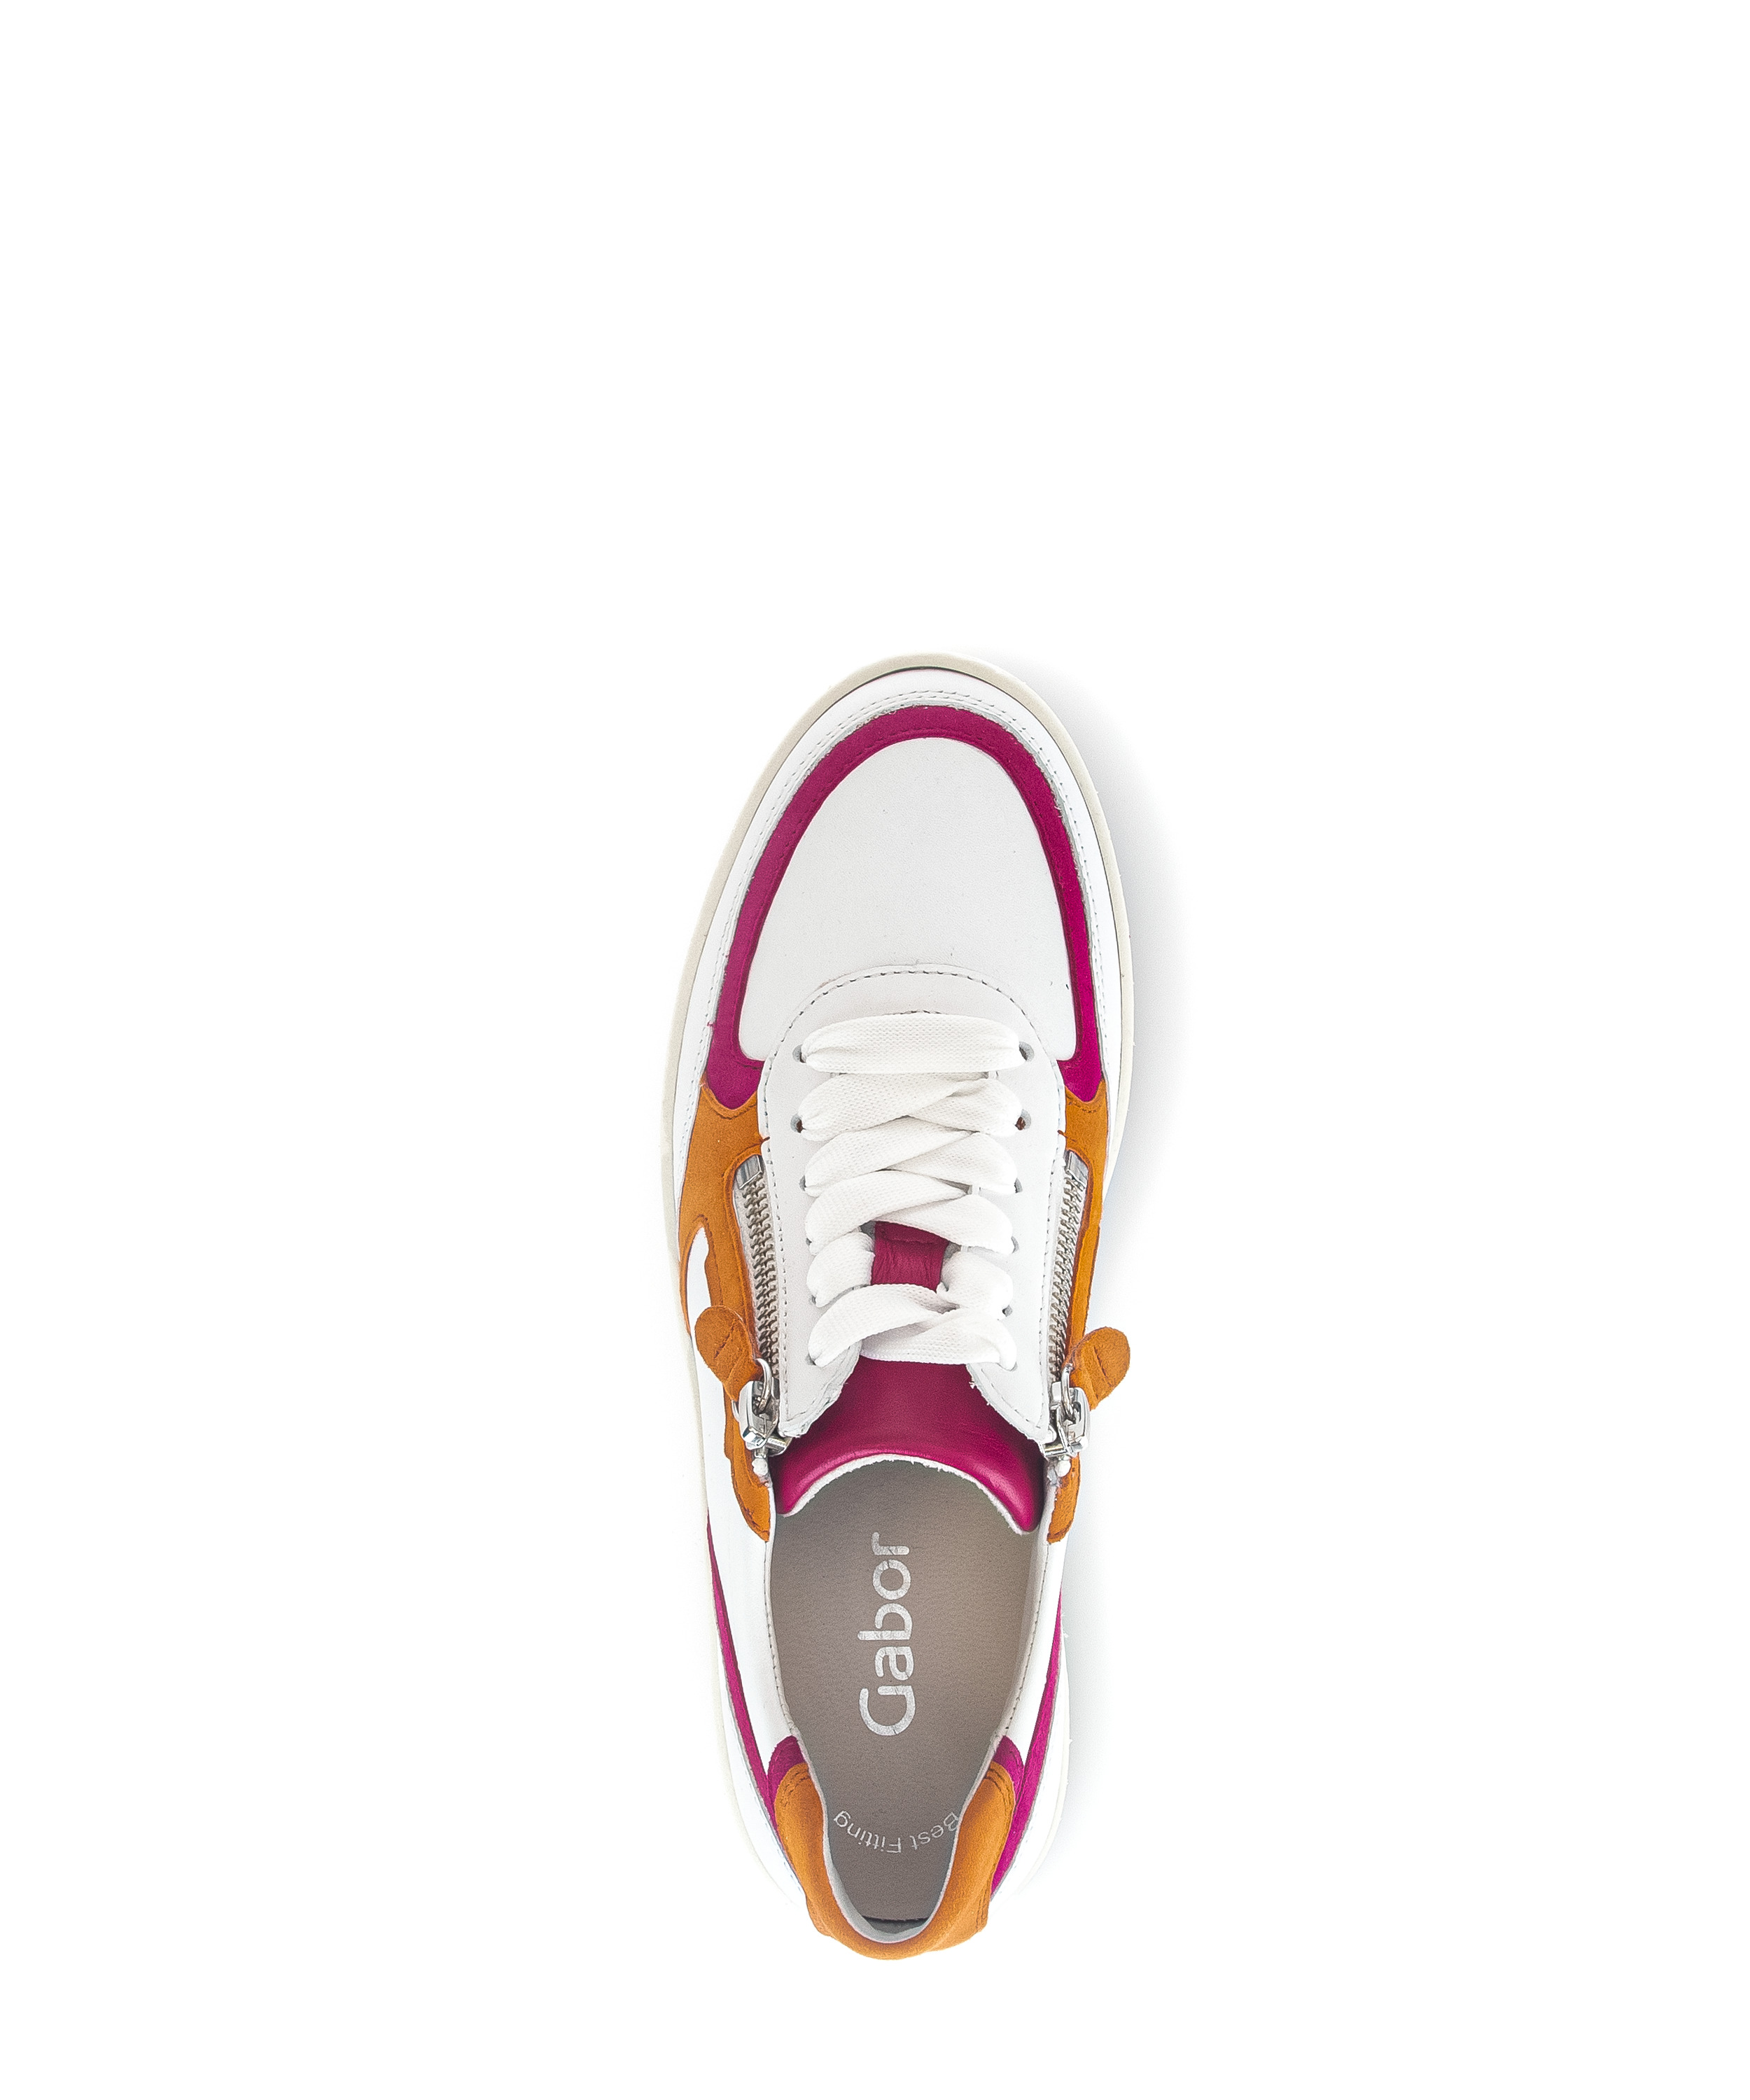 Gabor Shoes Sneaker - Weiß / Pink Kombi Leder